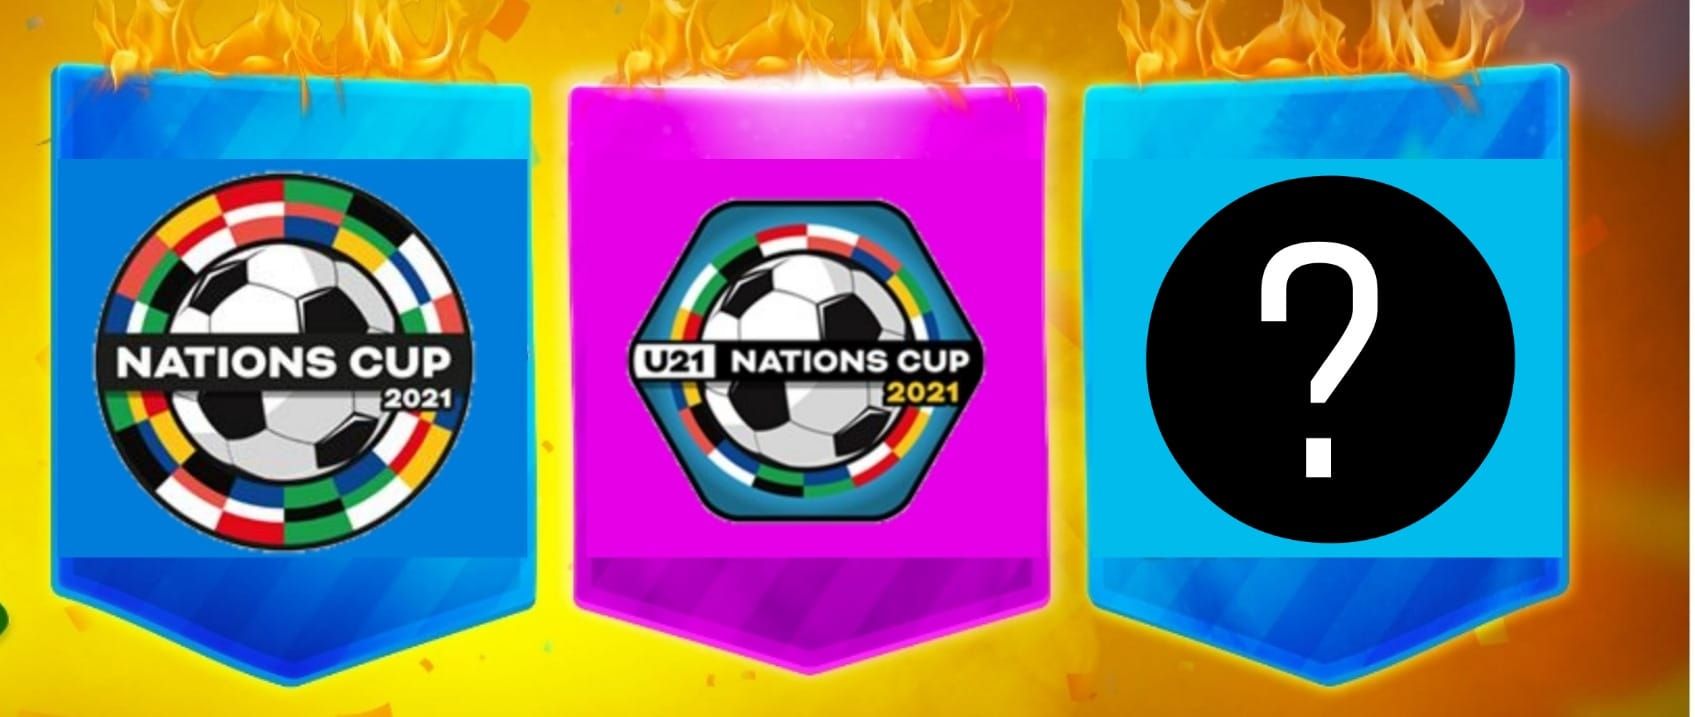 Nations Cup logo.jpeg